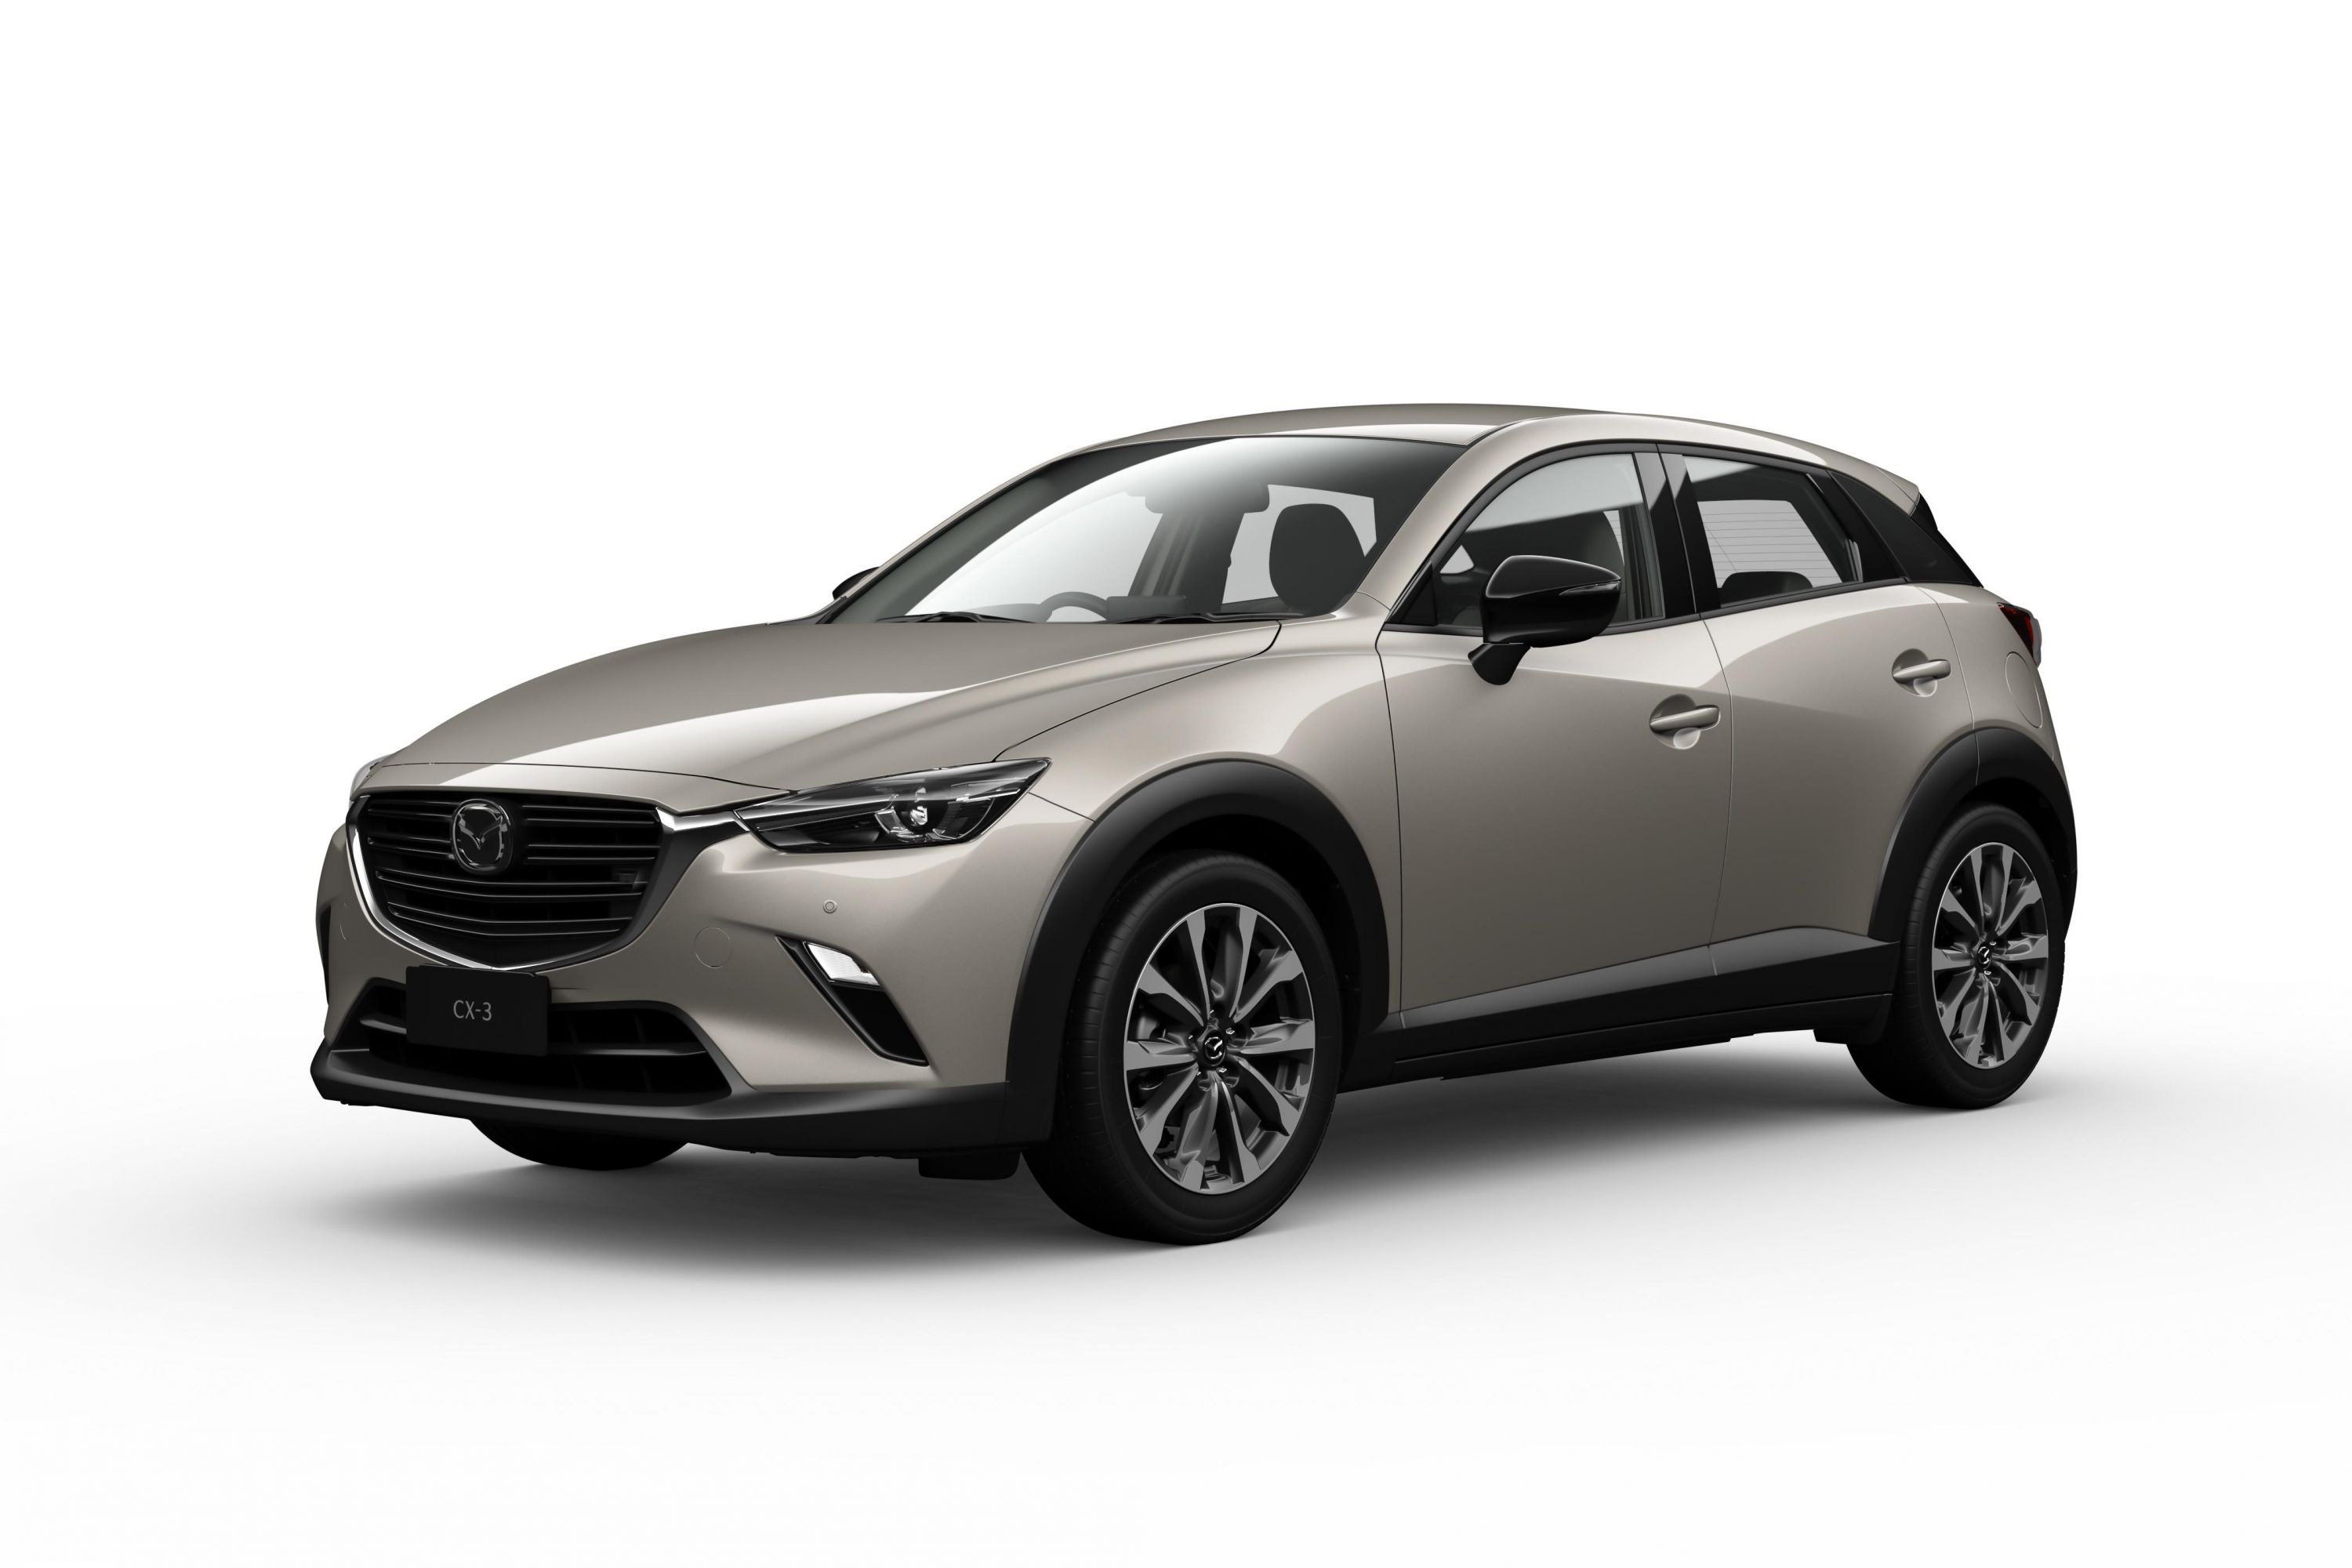 Get the New Mazda CX-3 from Harris Mazda